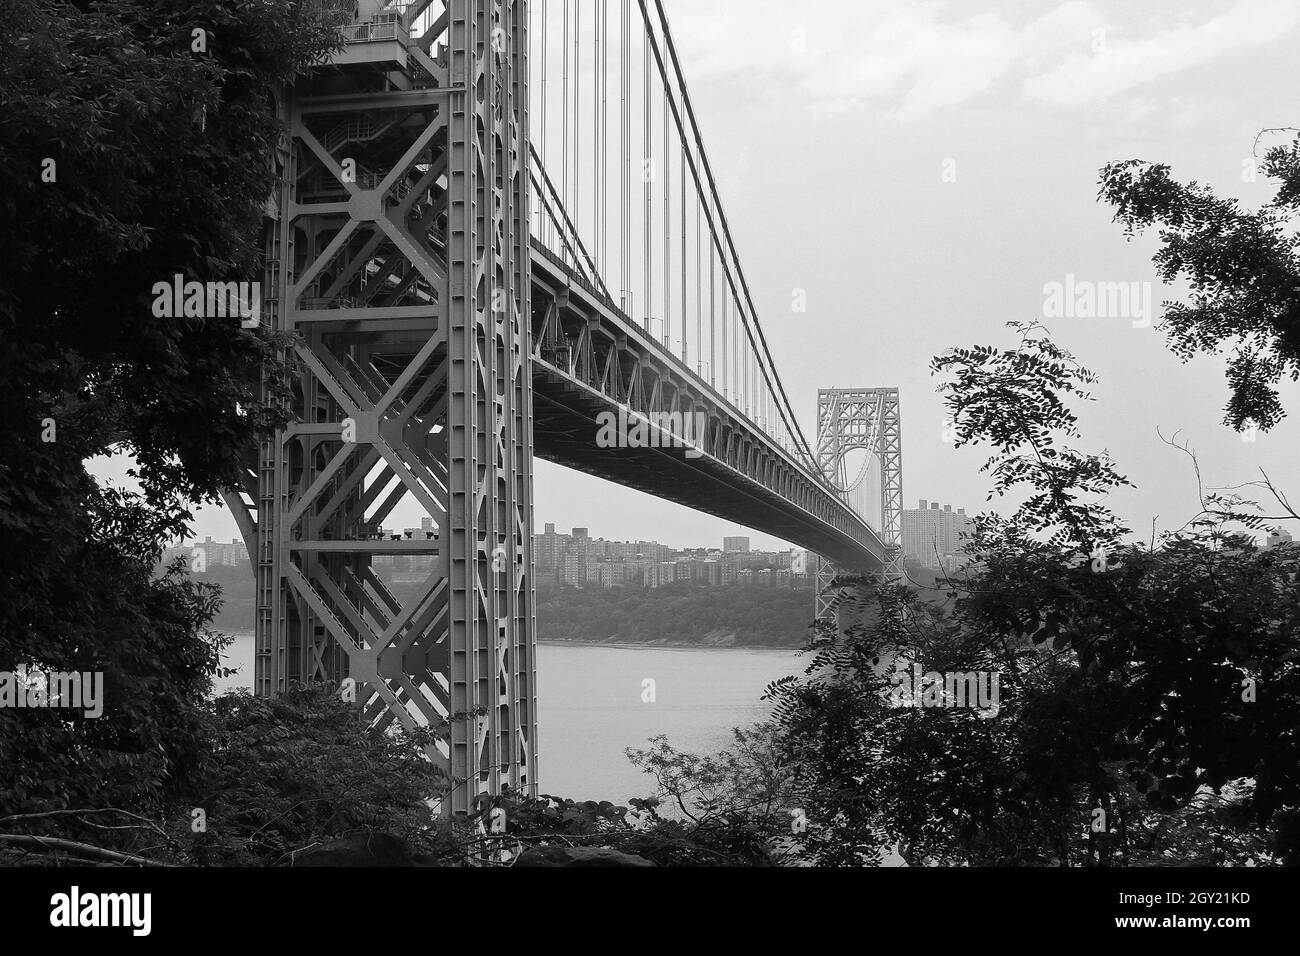 Grayscale shot of George Washington Bridge over the Hudson River in New York, USA Stock Photo